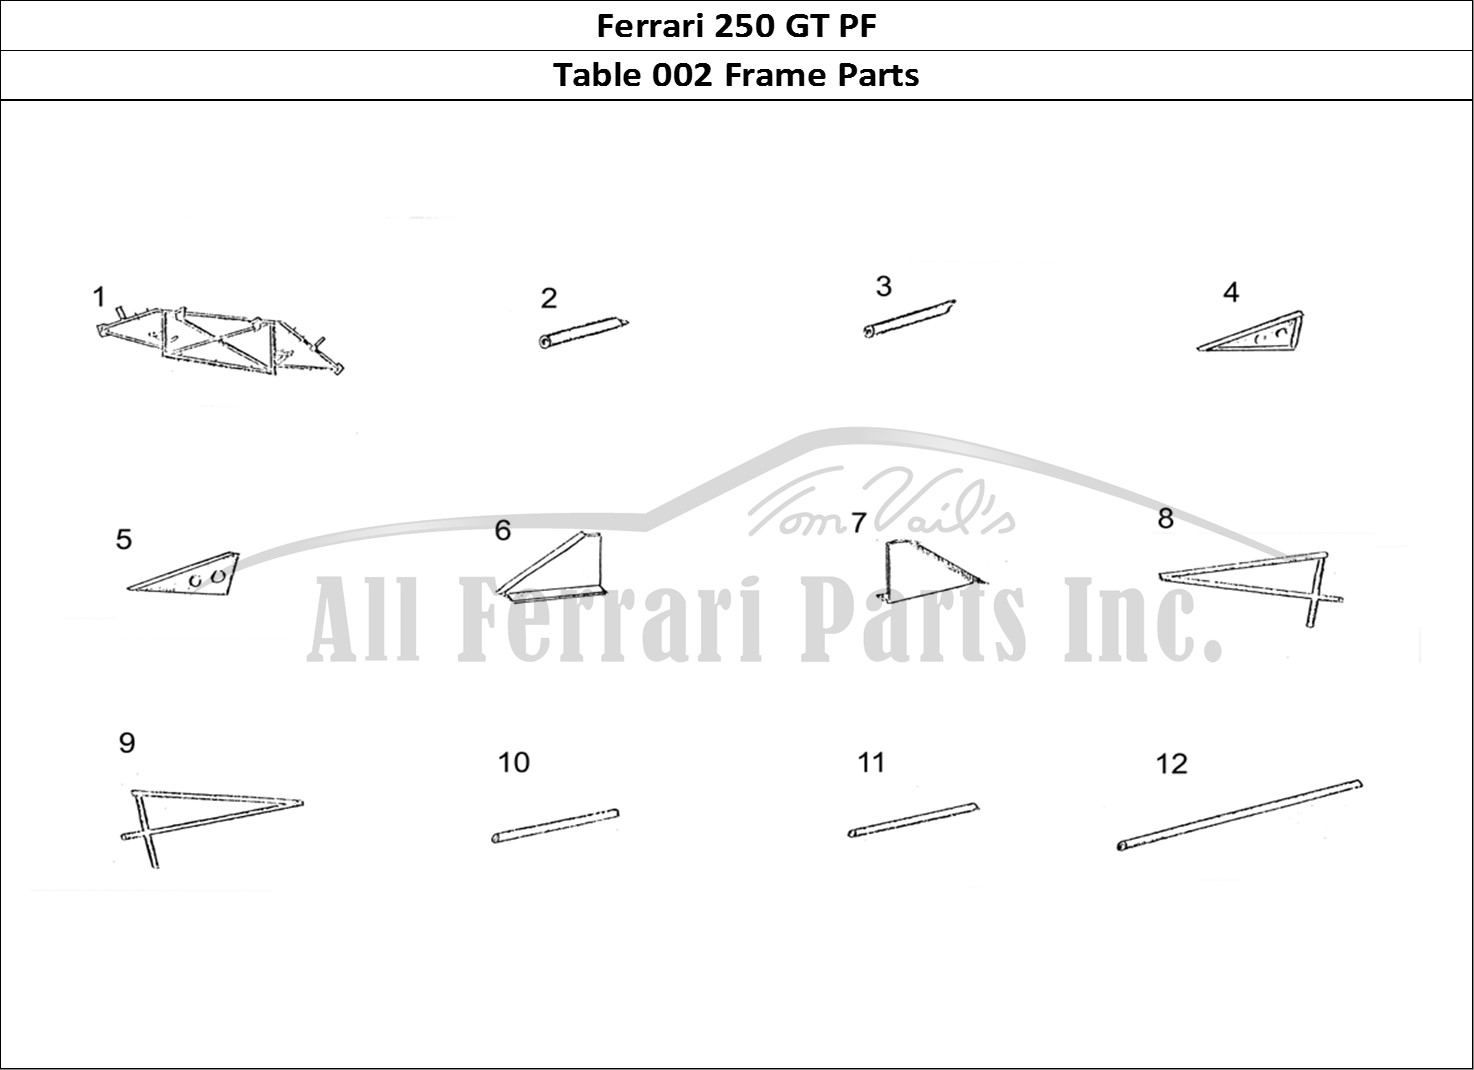 Ferrari Parts Ferrari 250 GT (Coachwork) Page 002 Chassis Parts